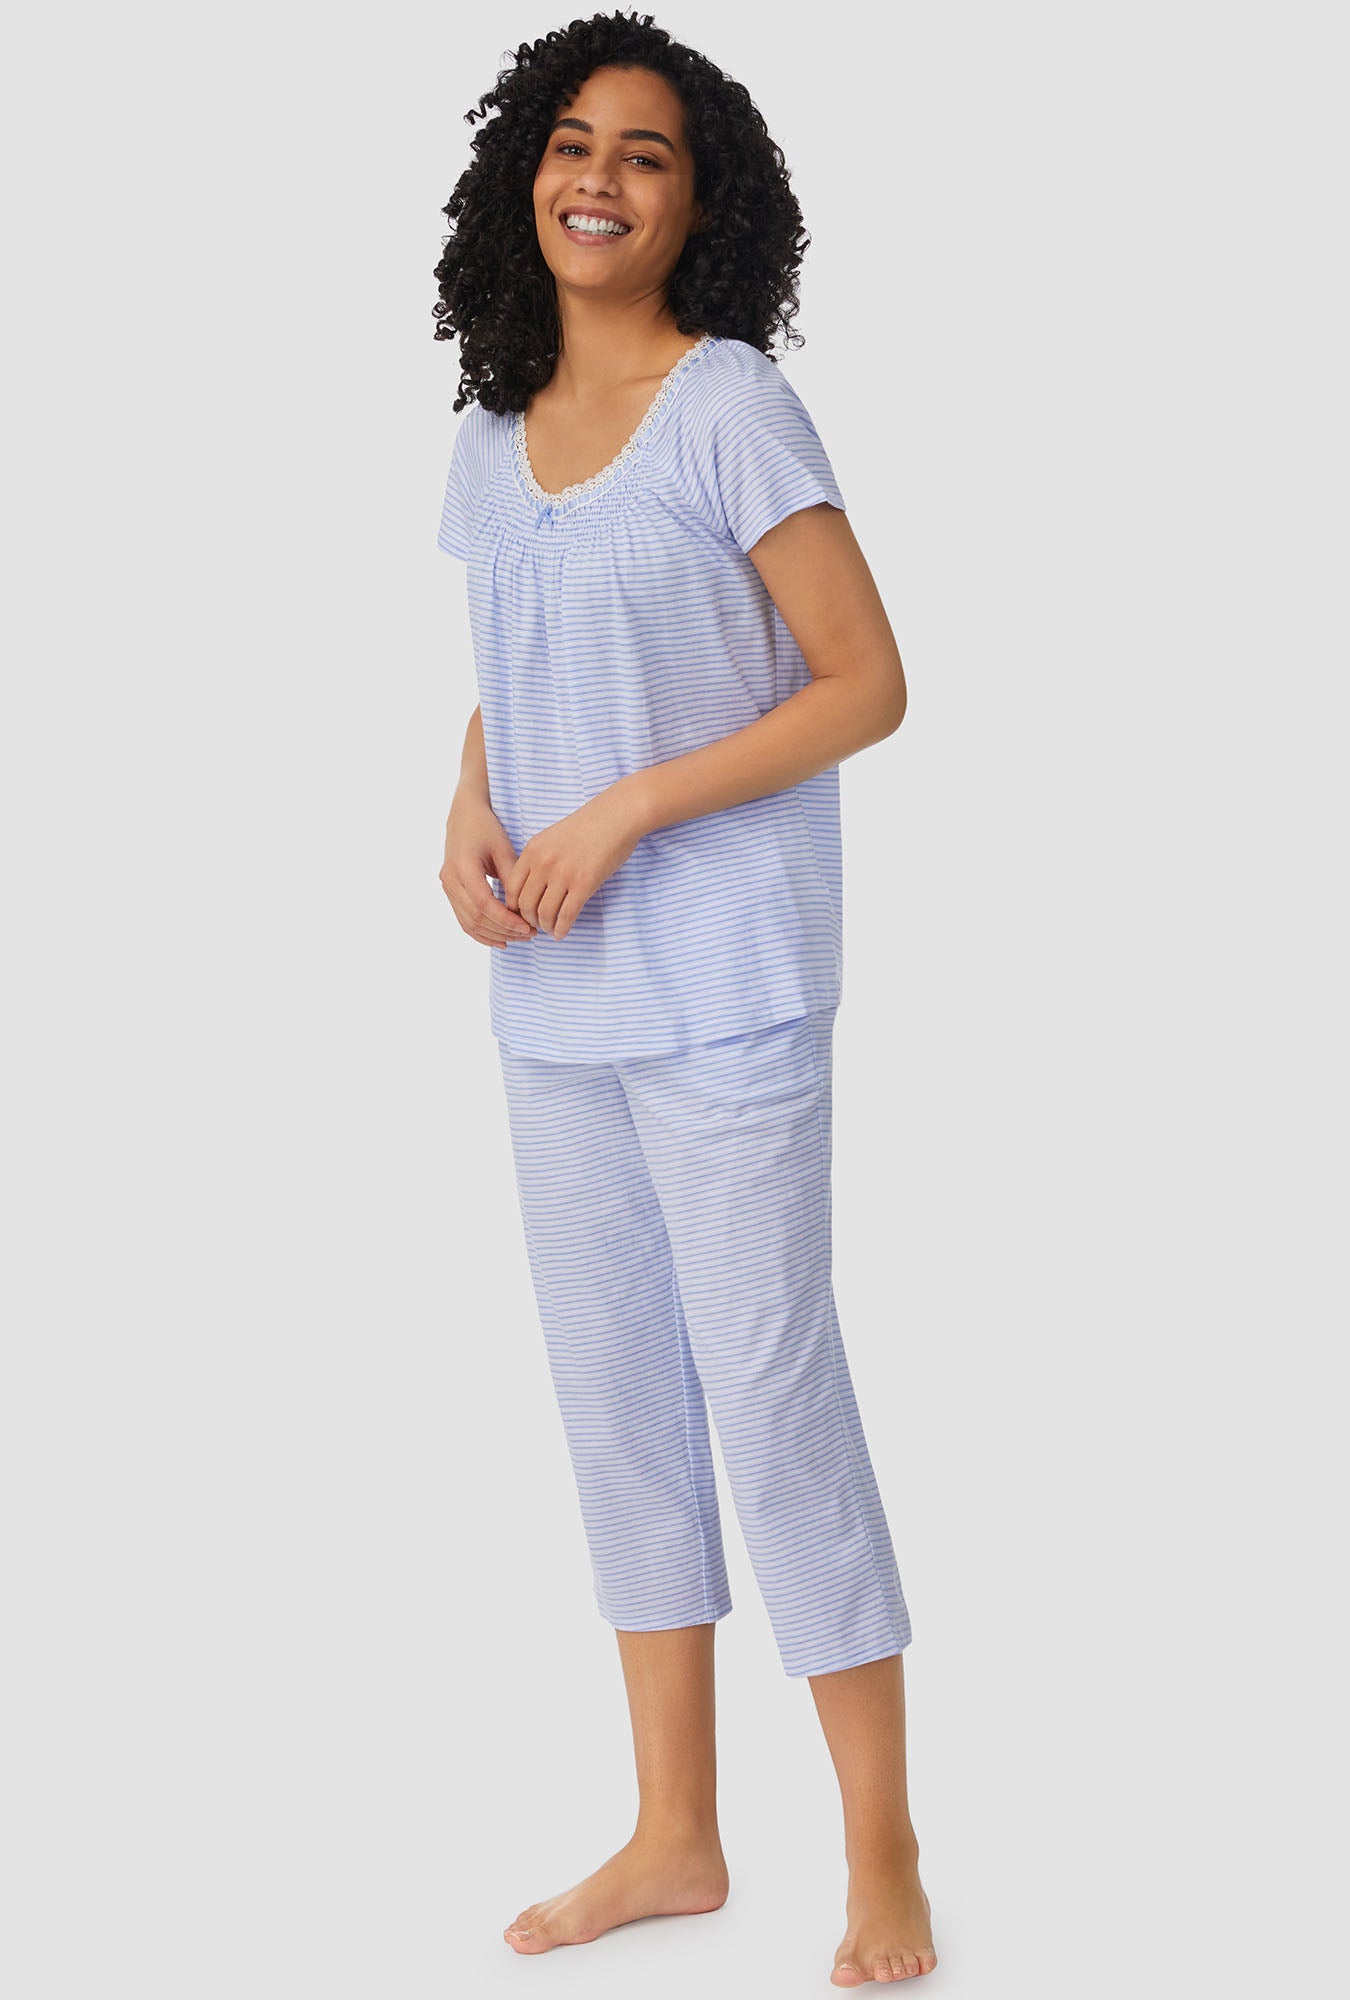 Cossy By Aqua 23515 Women's Short Sleeve Capri Pajama Set-blue - Trendyol